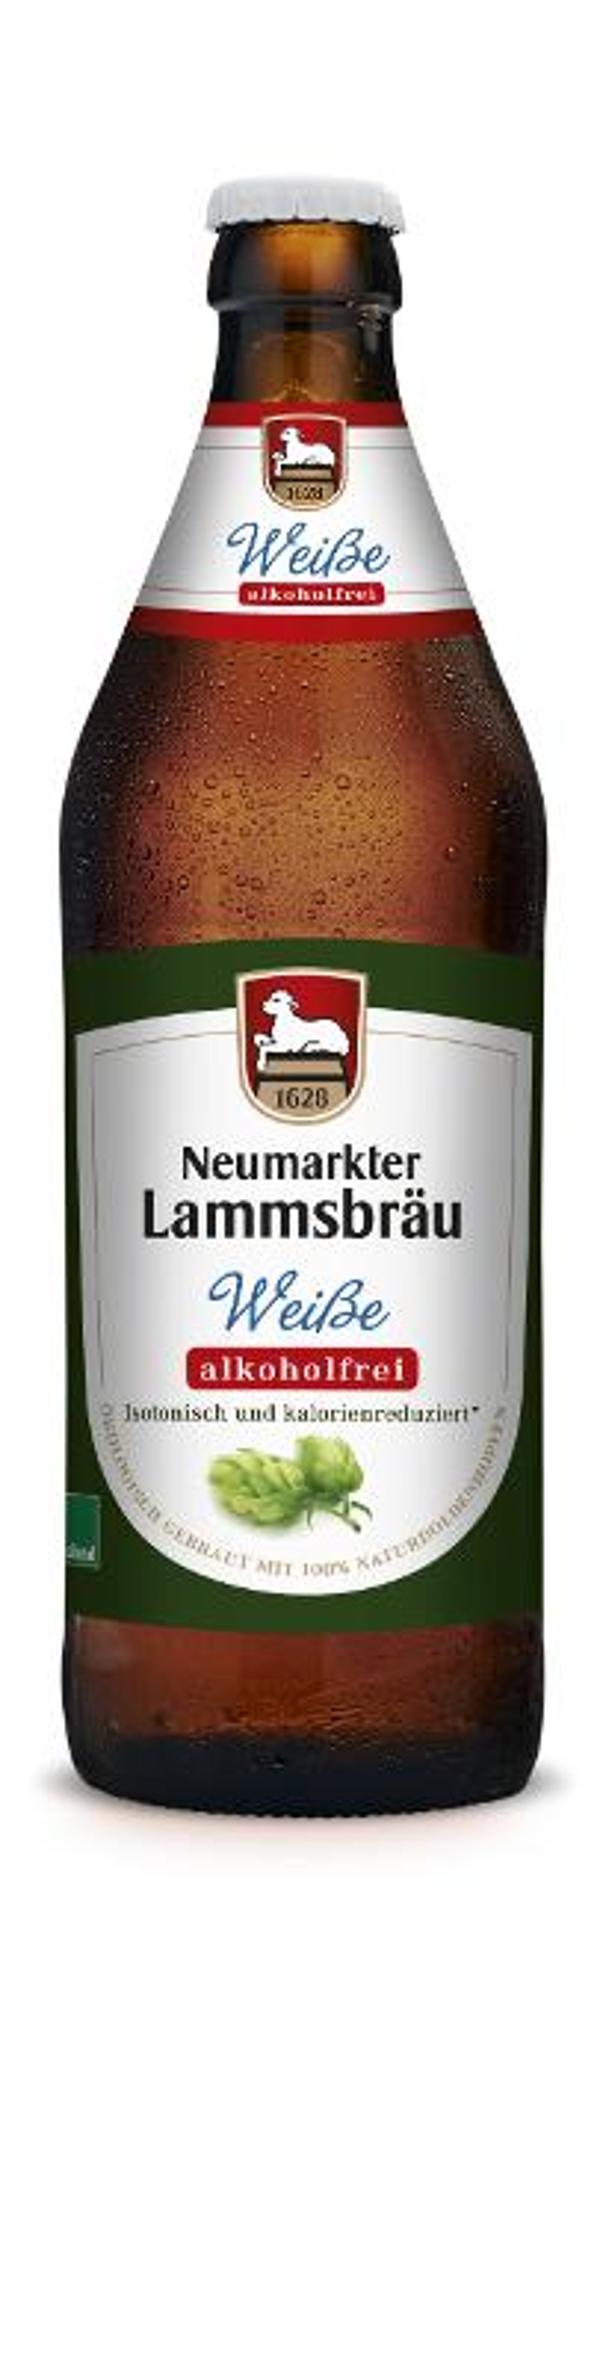 Produktfoto zu VPE Bier Weiße alkoholfrei 10x0,5 l Neumarkter Lammsbräu